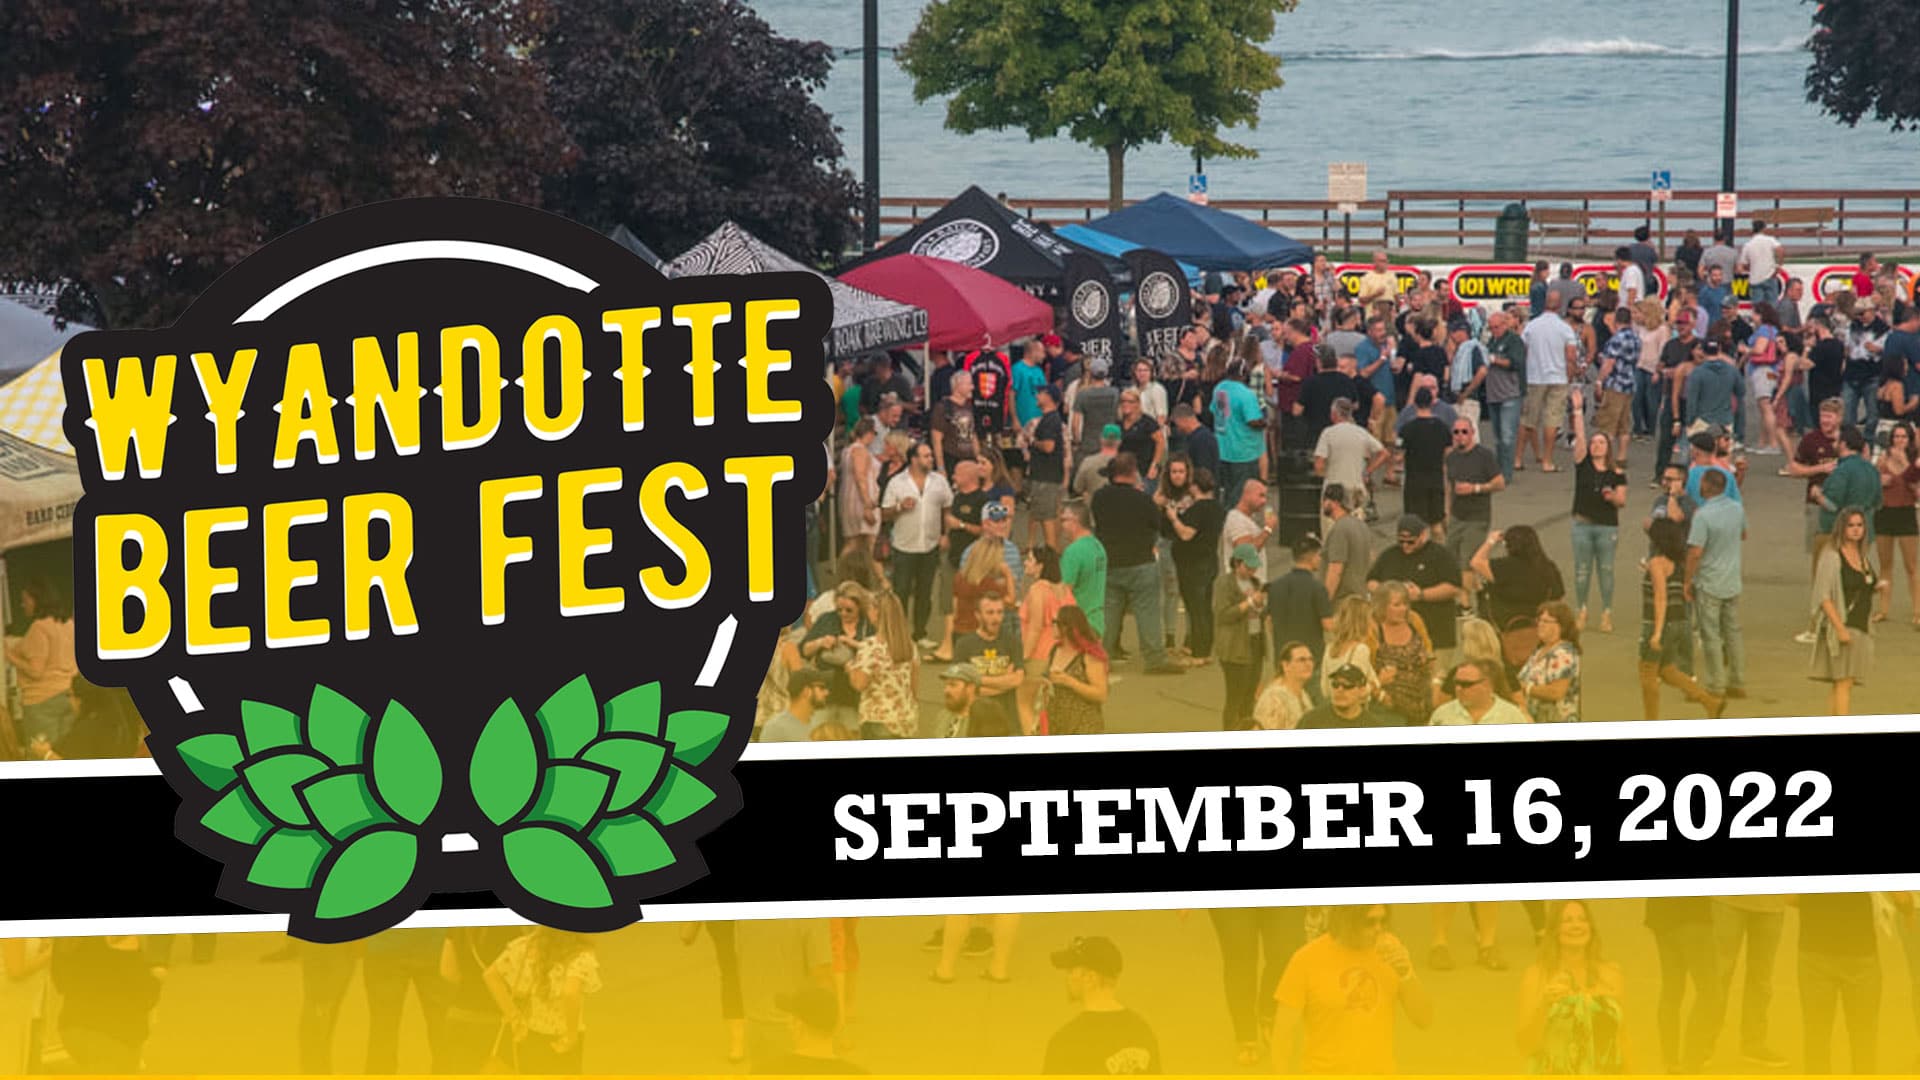 Wyandotte Beer Fest; September 16, 2022